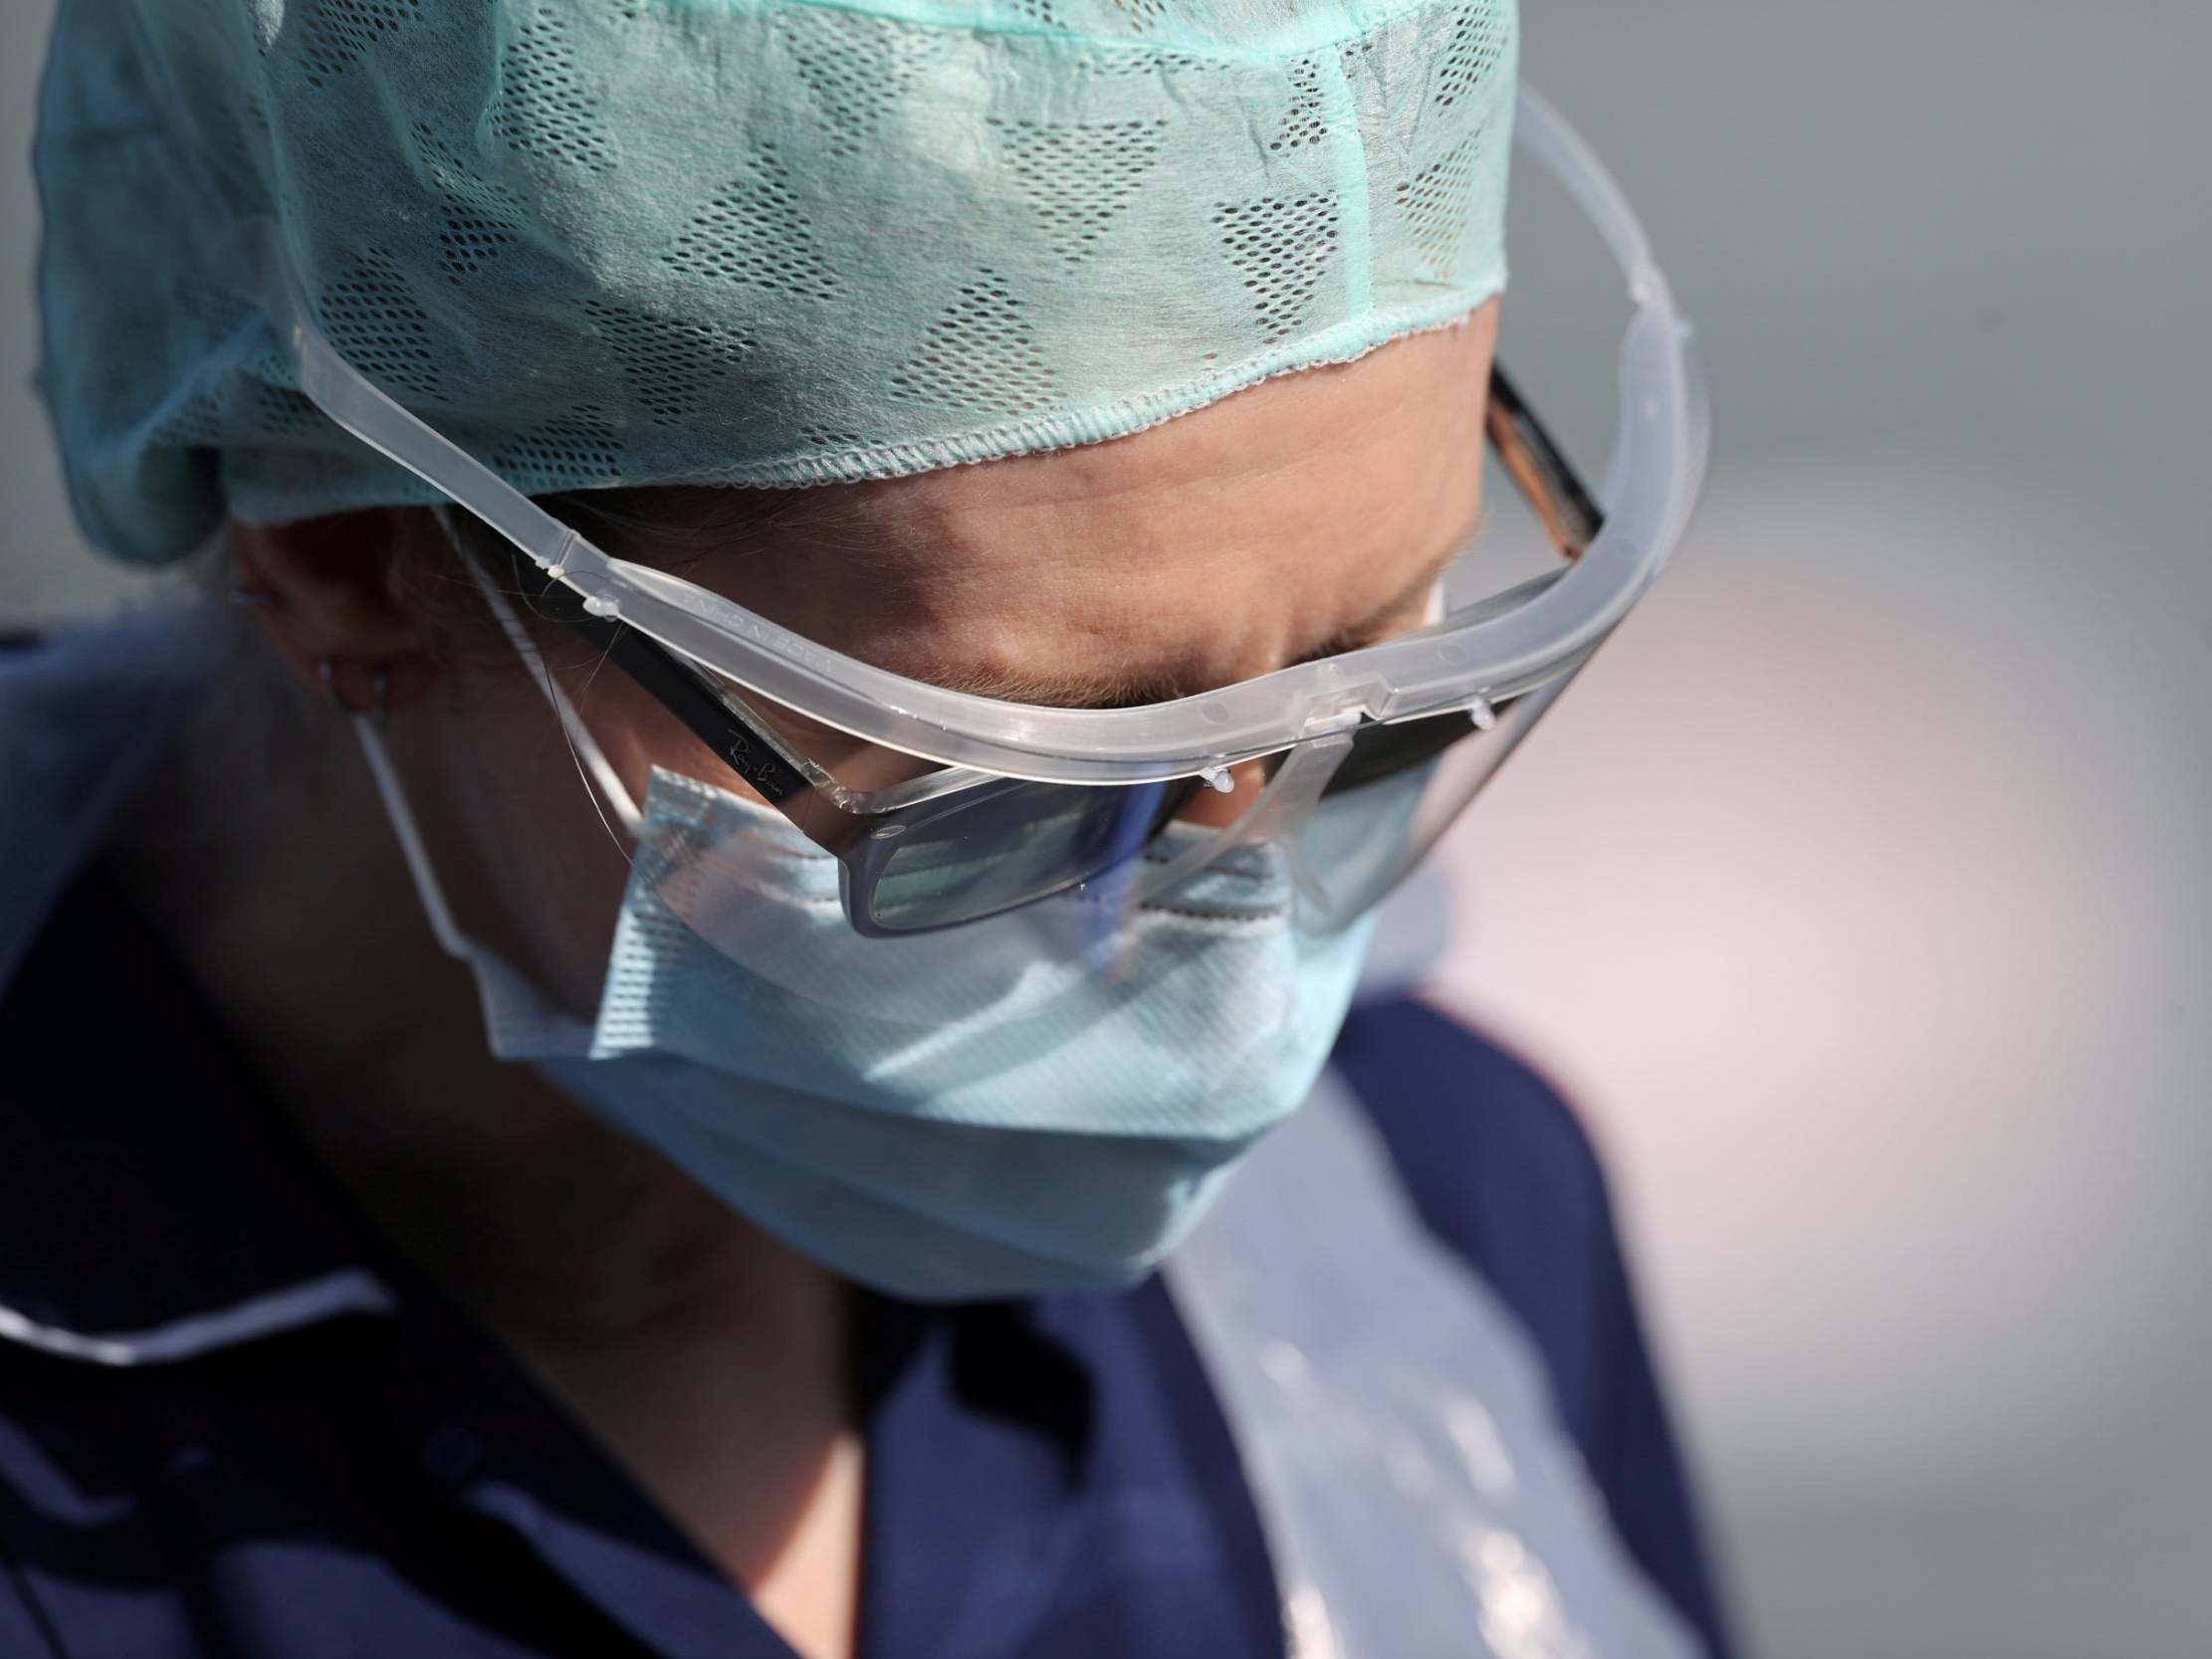 A member of medical staff is seen at an NHS coronavirus disease testing facility